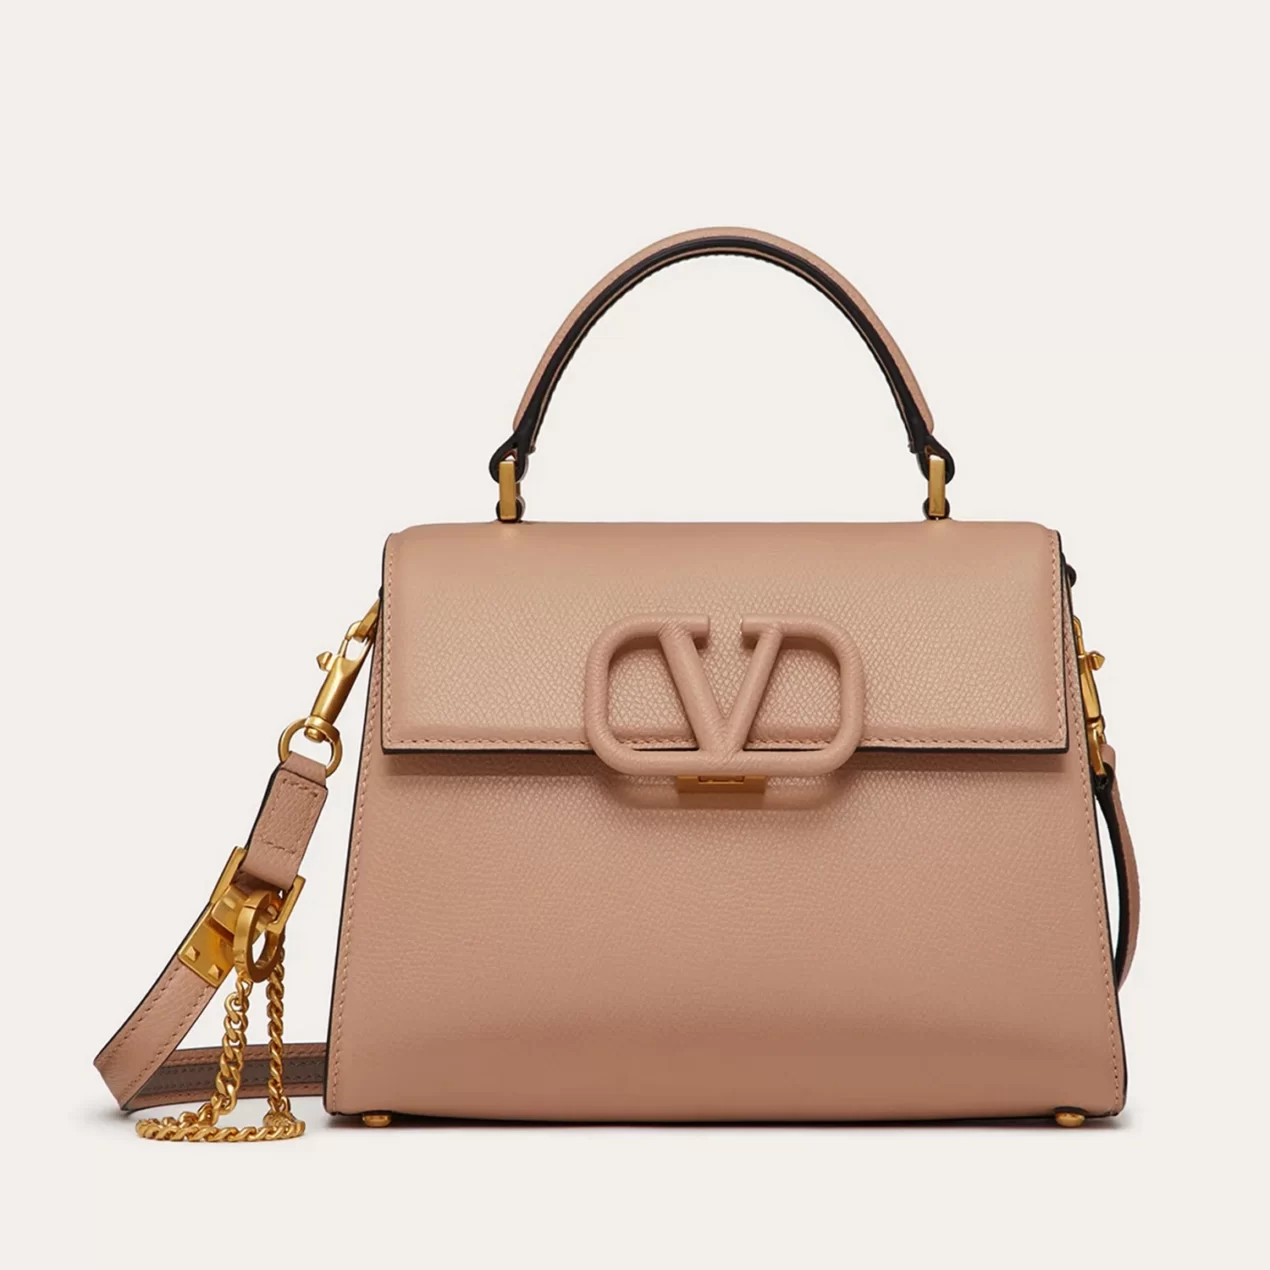 Luxury Valentino Garavani handbags to invest in this season